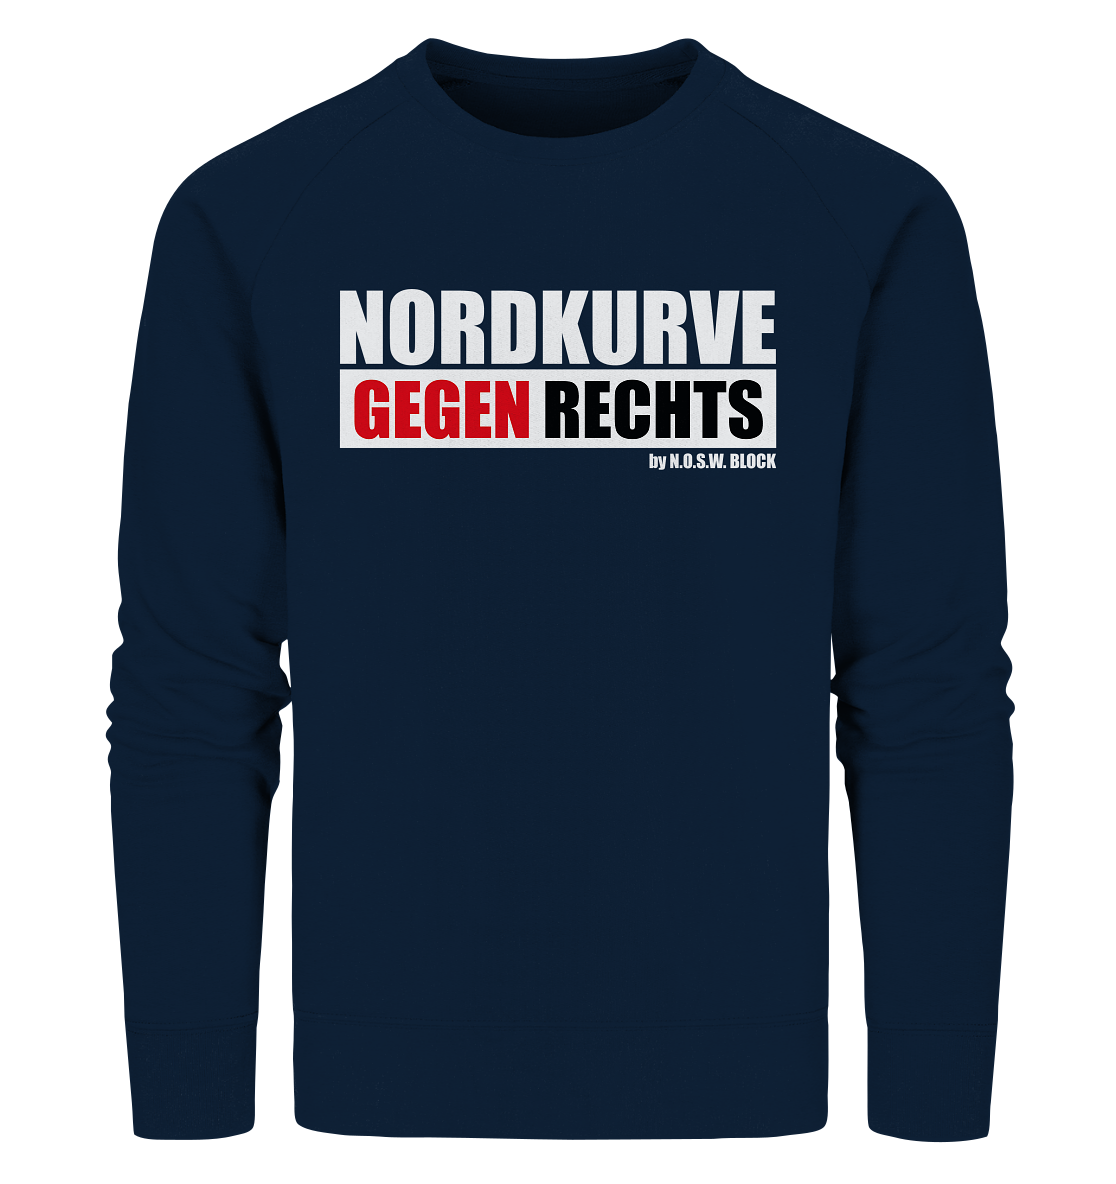 N.O.S.W. BLOCK Gegen Rechts Sweater "NORDKURVE GEGEN RECHTS" Männer Organic Sweatshirt navy